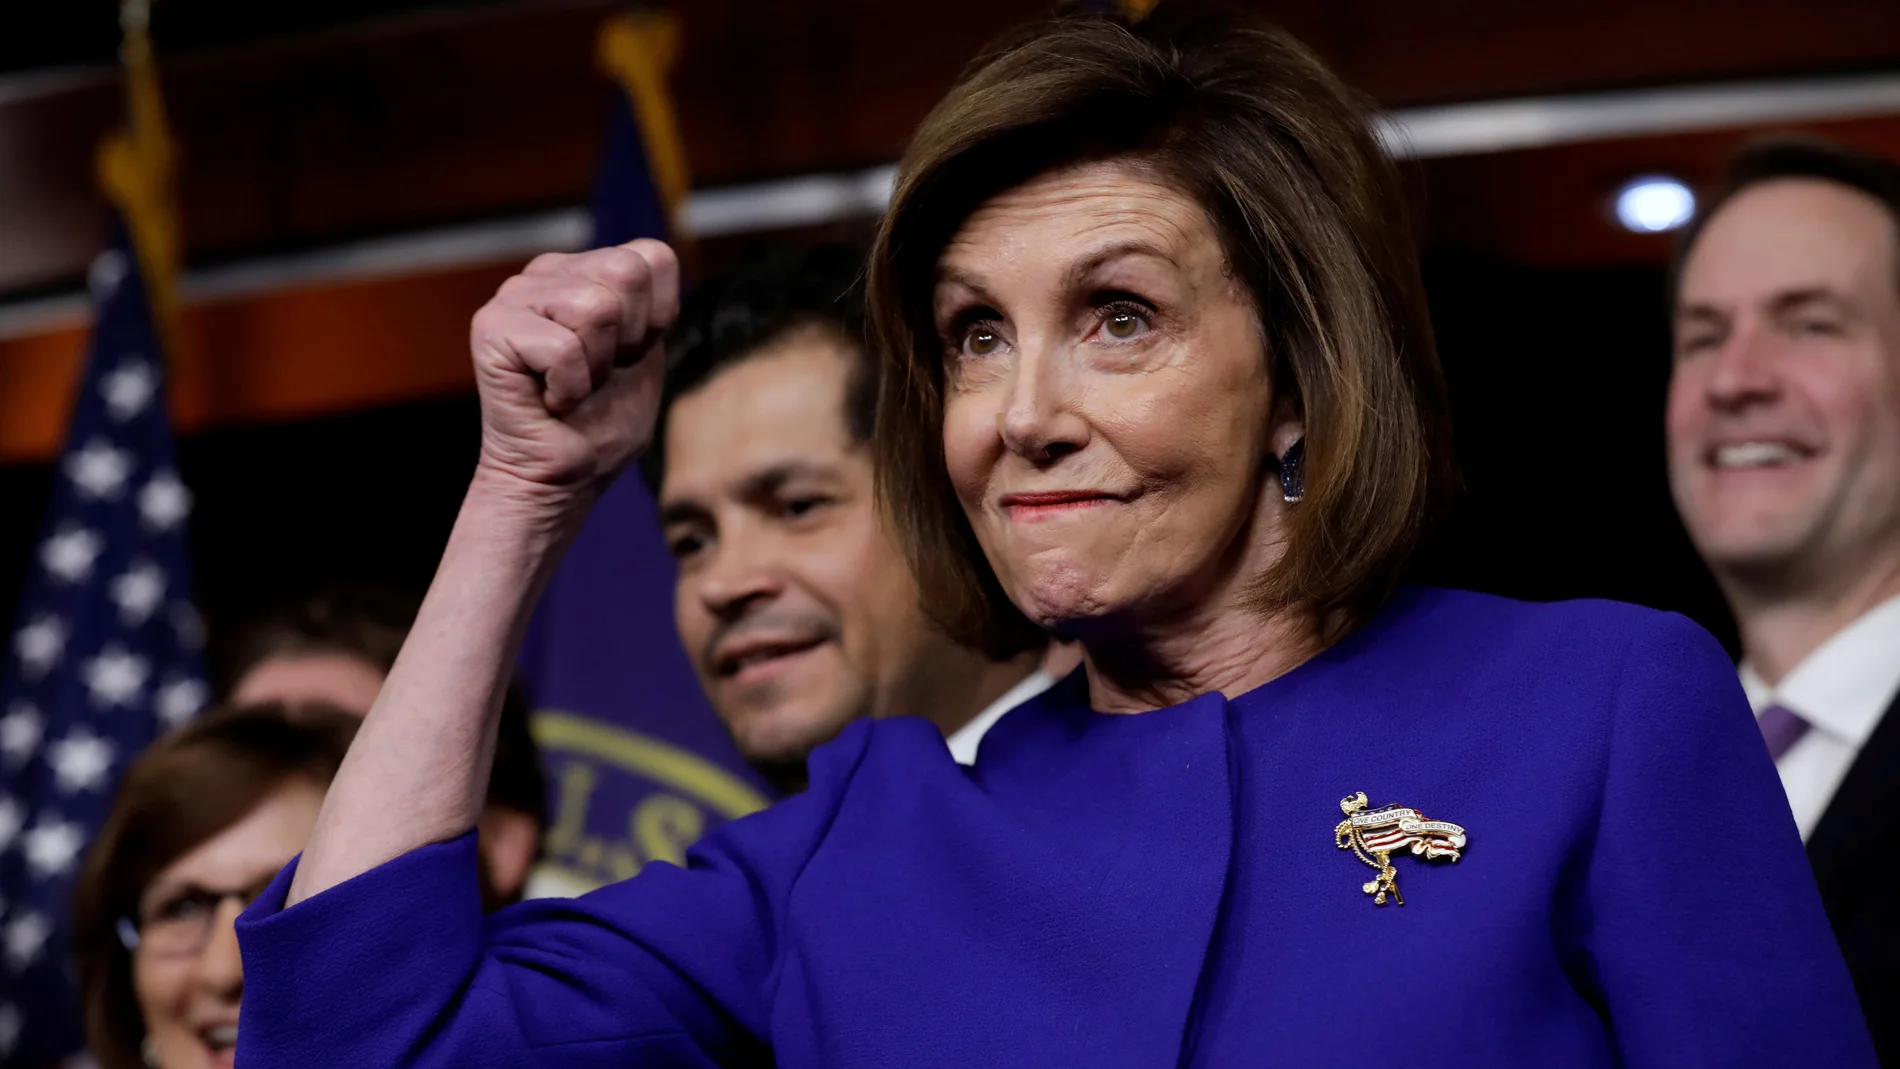 House Speaker Nancy Pelosi on USMCA trade agreement on Capitol Hill in Washington